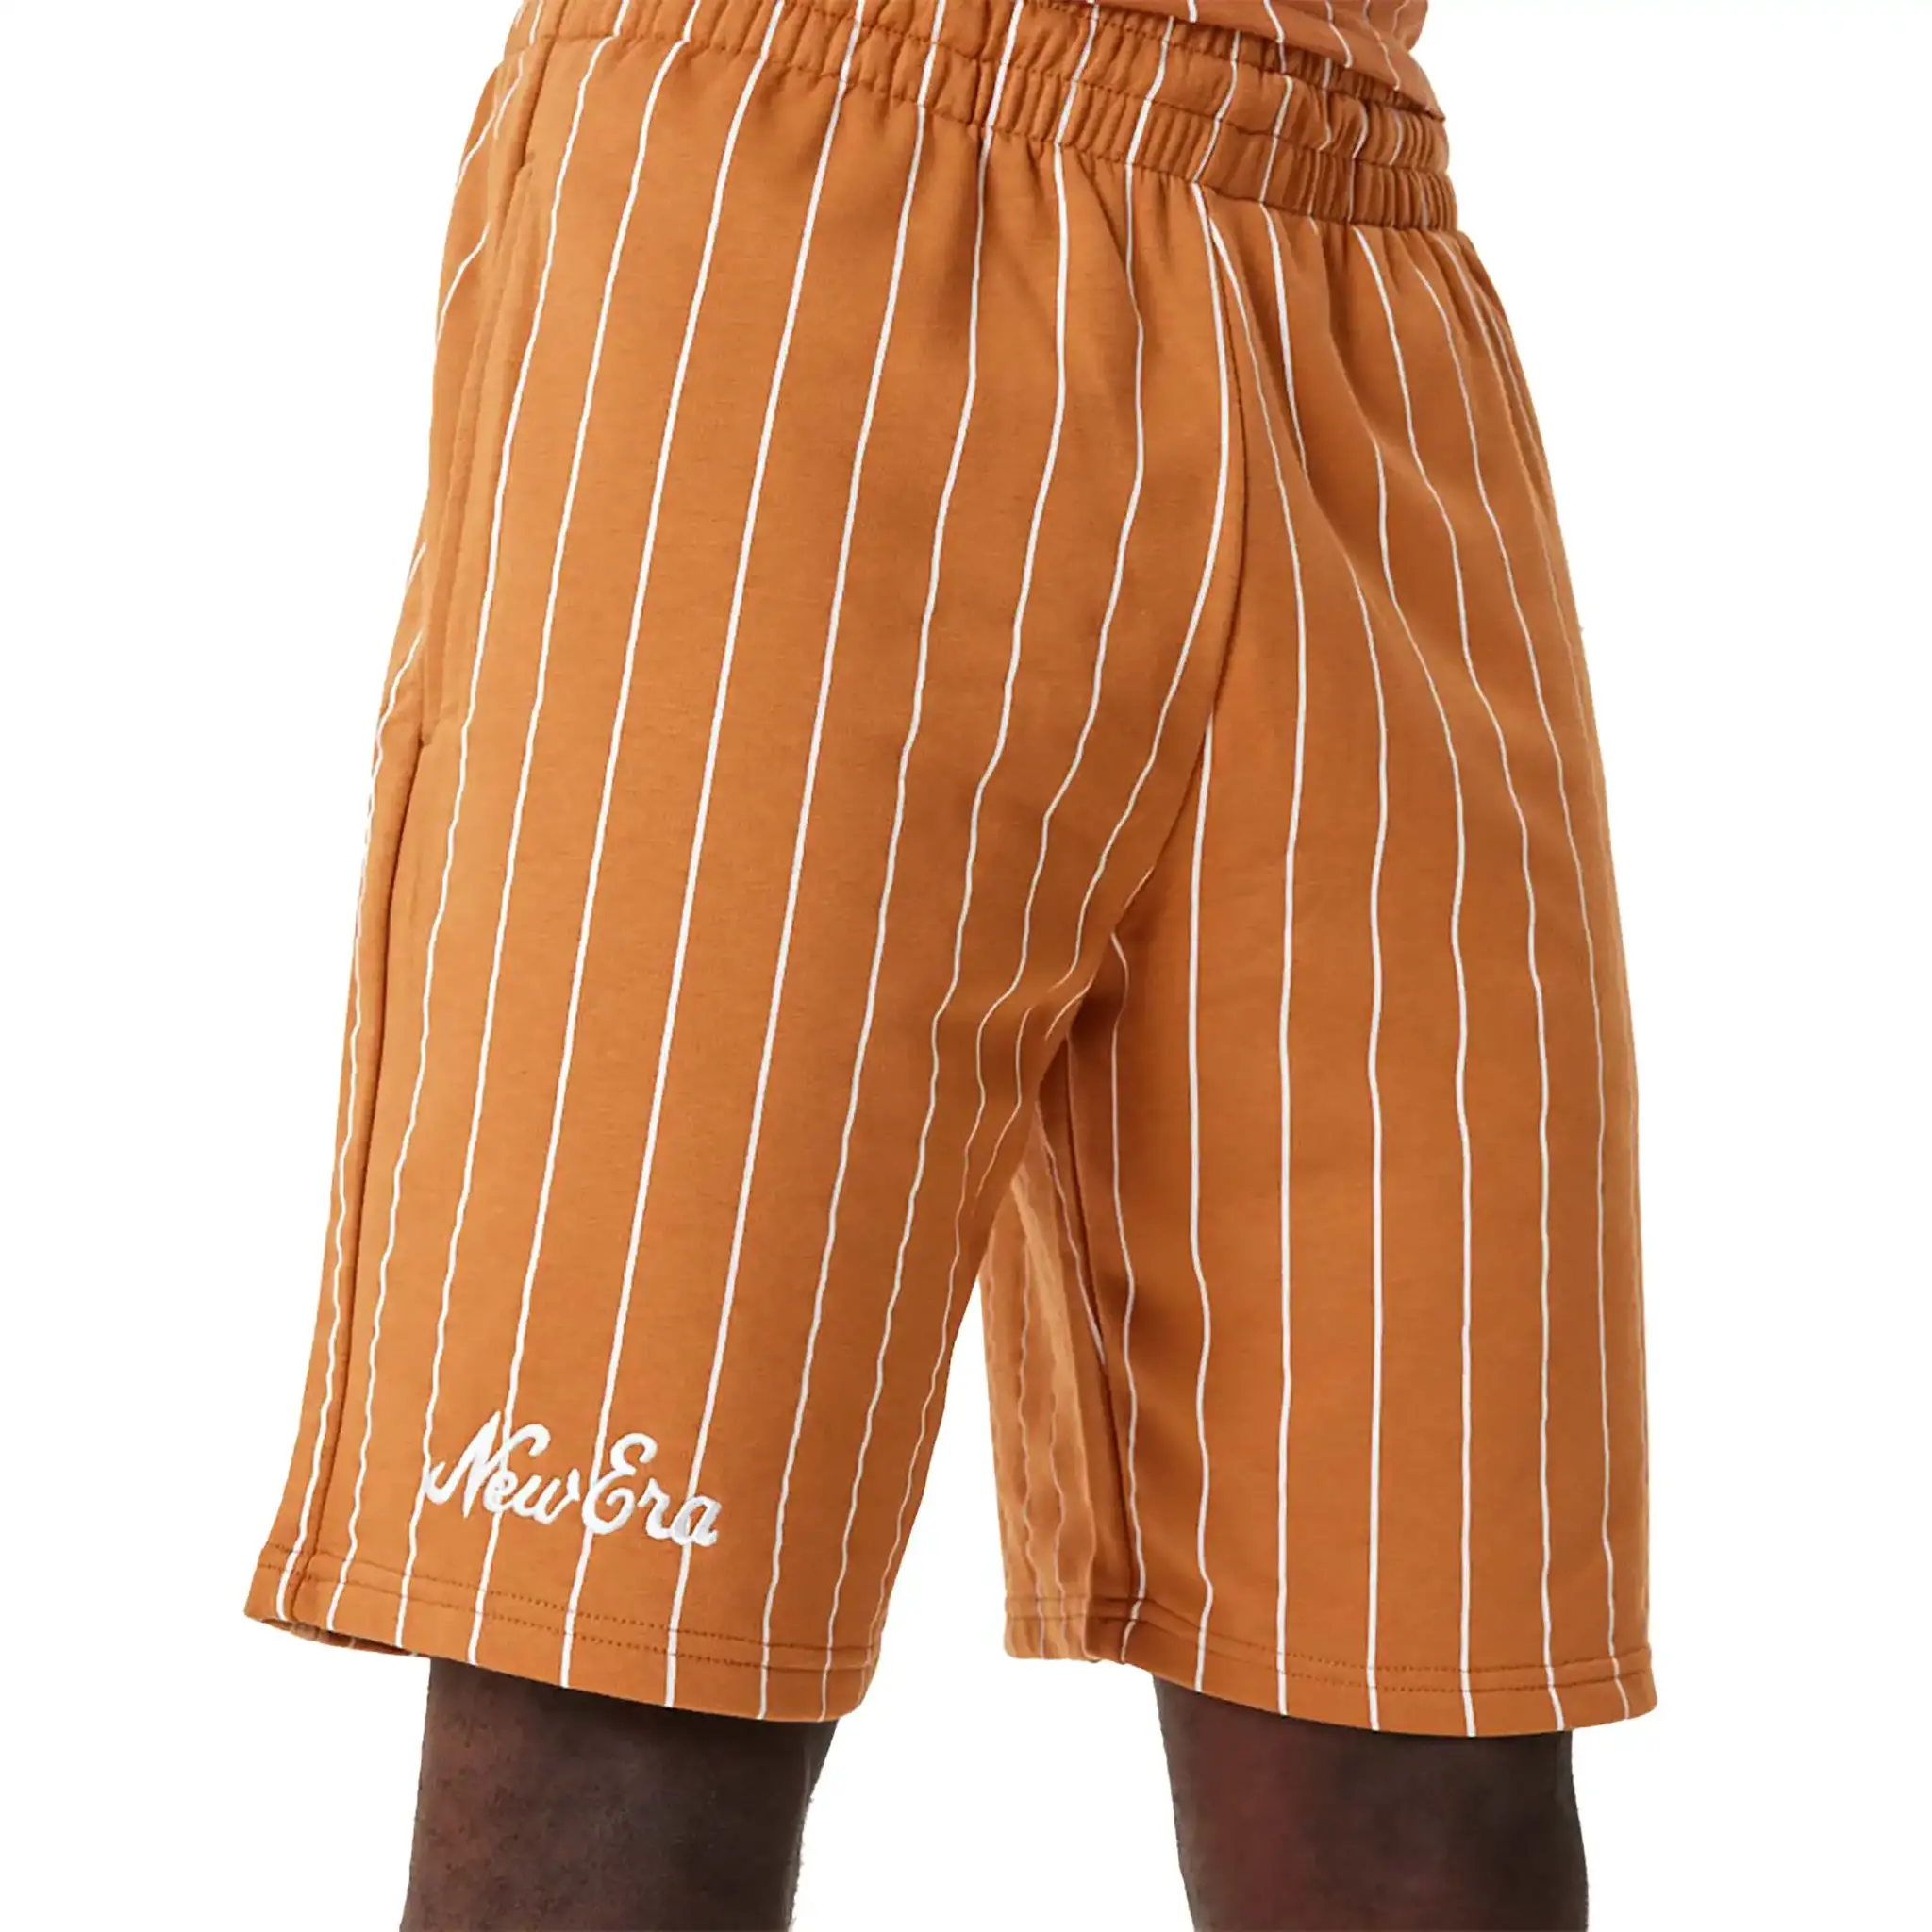 New Era / shorts Pinstripe in bruin